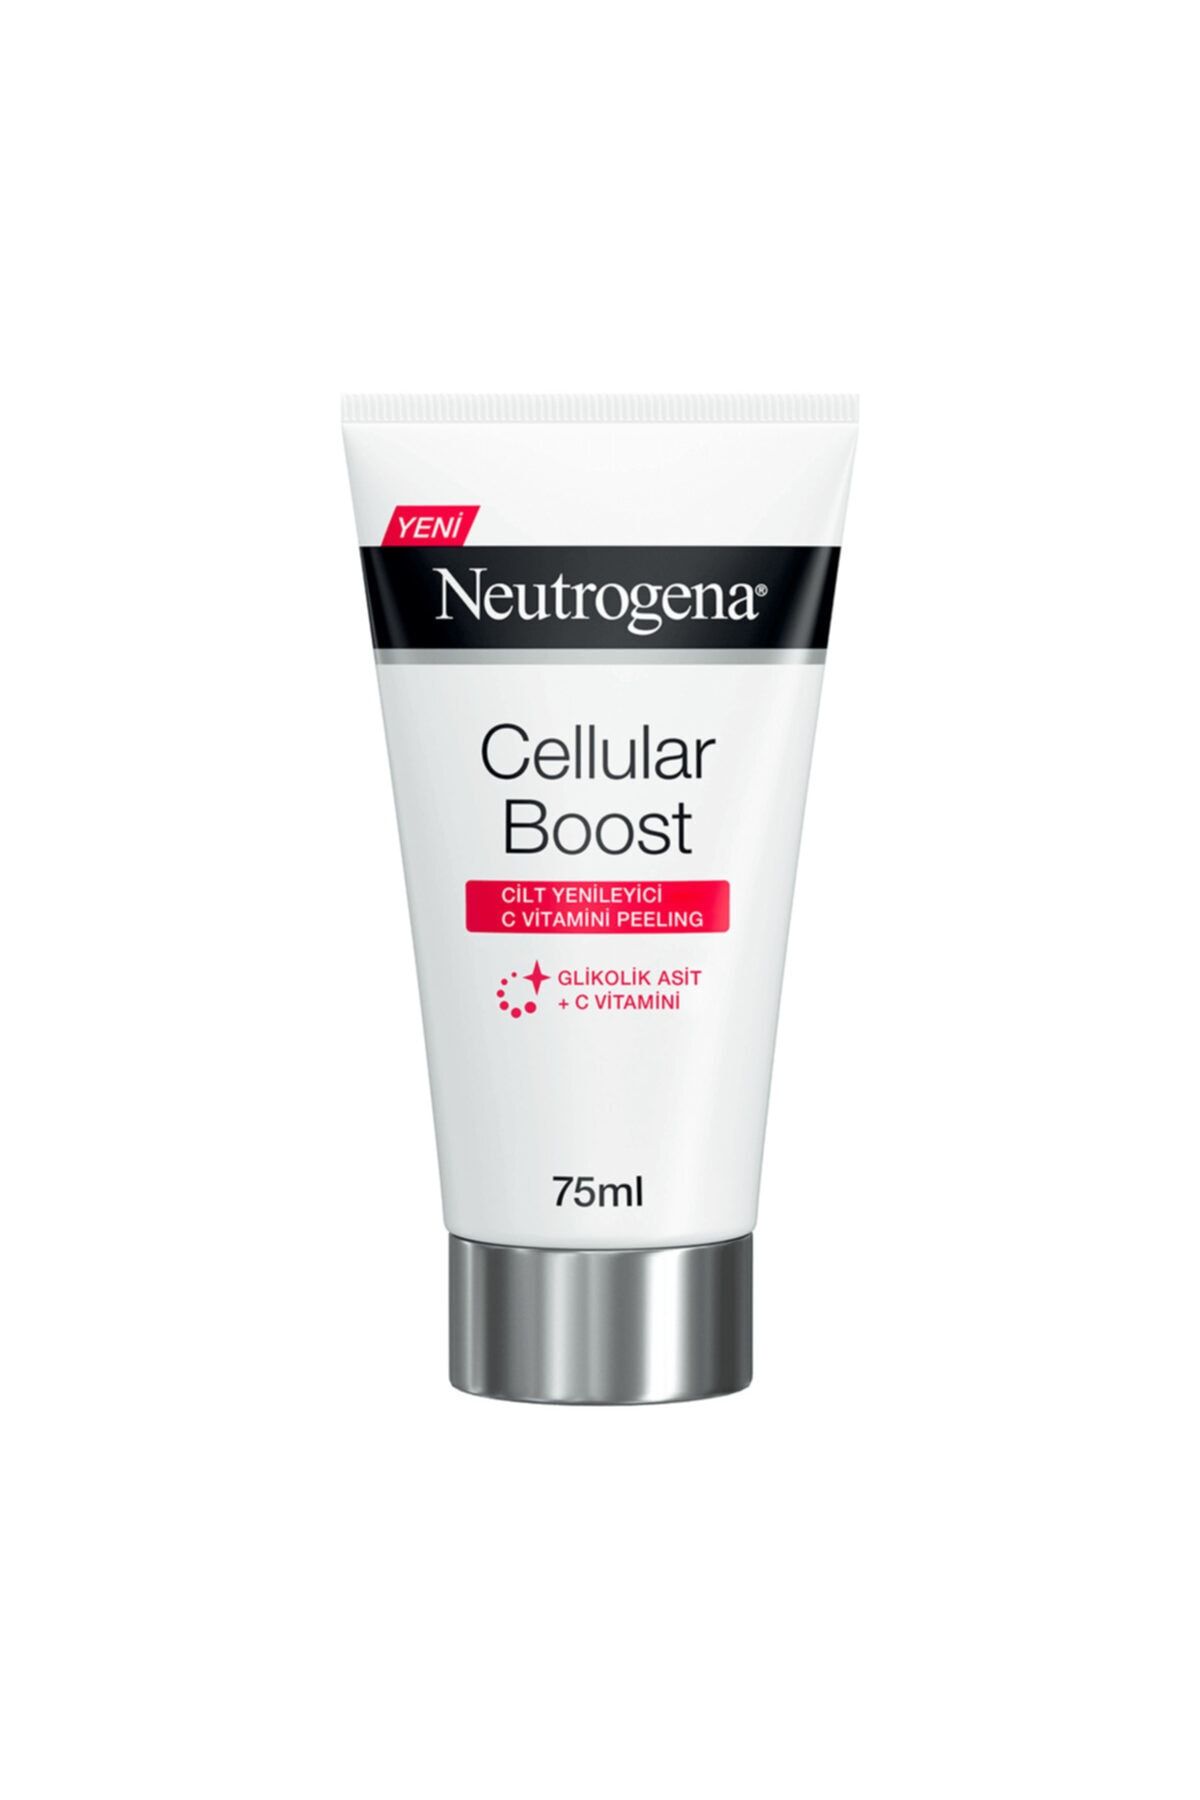 Neutrogena (MİNİ PAMUK ) Neutrogena Cellular Boost C Vitamini İçeren Peeling 75 Ml ( 1 ADET )